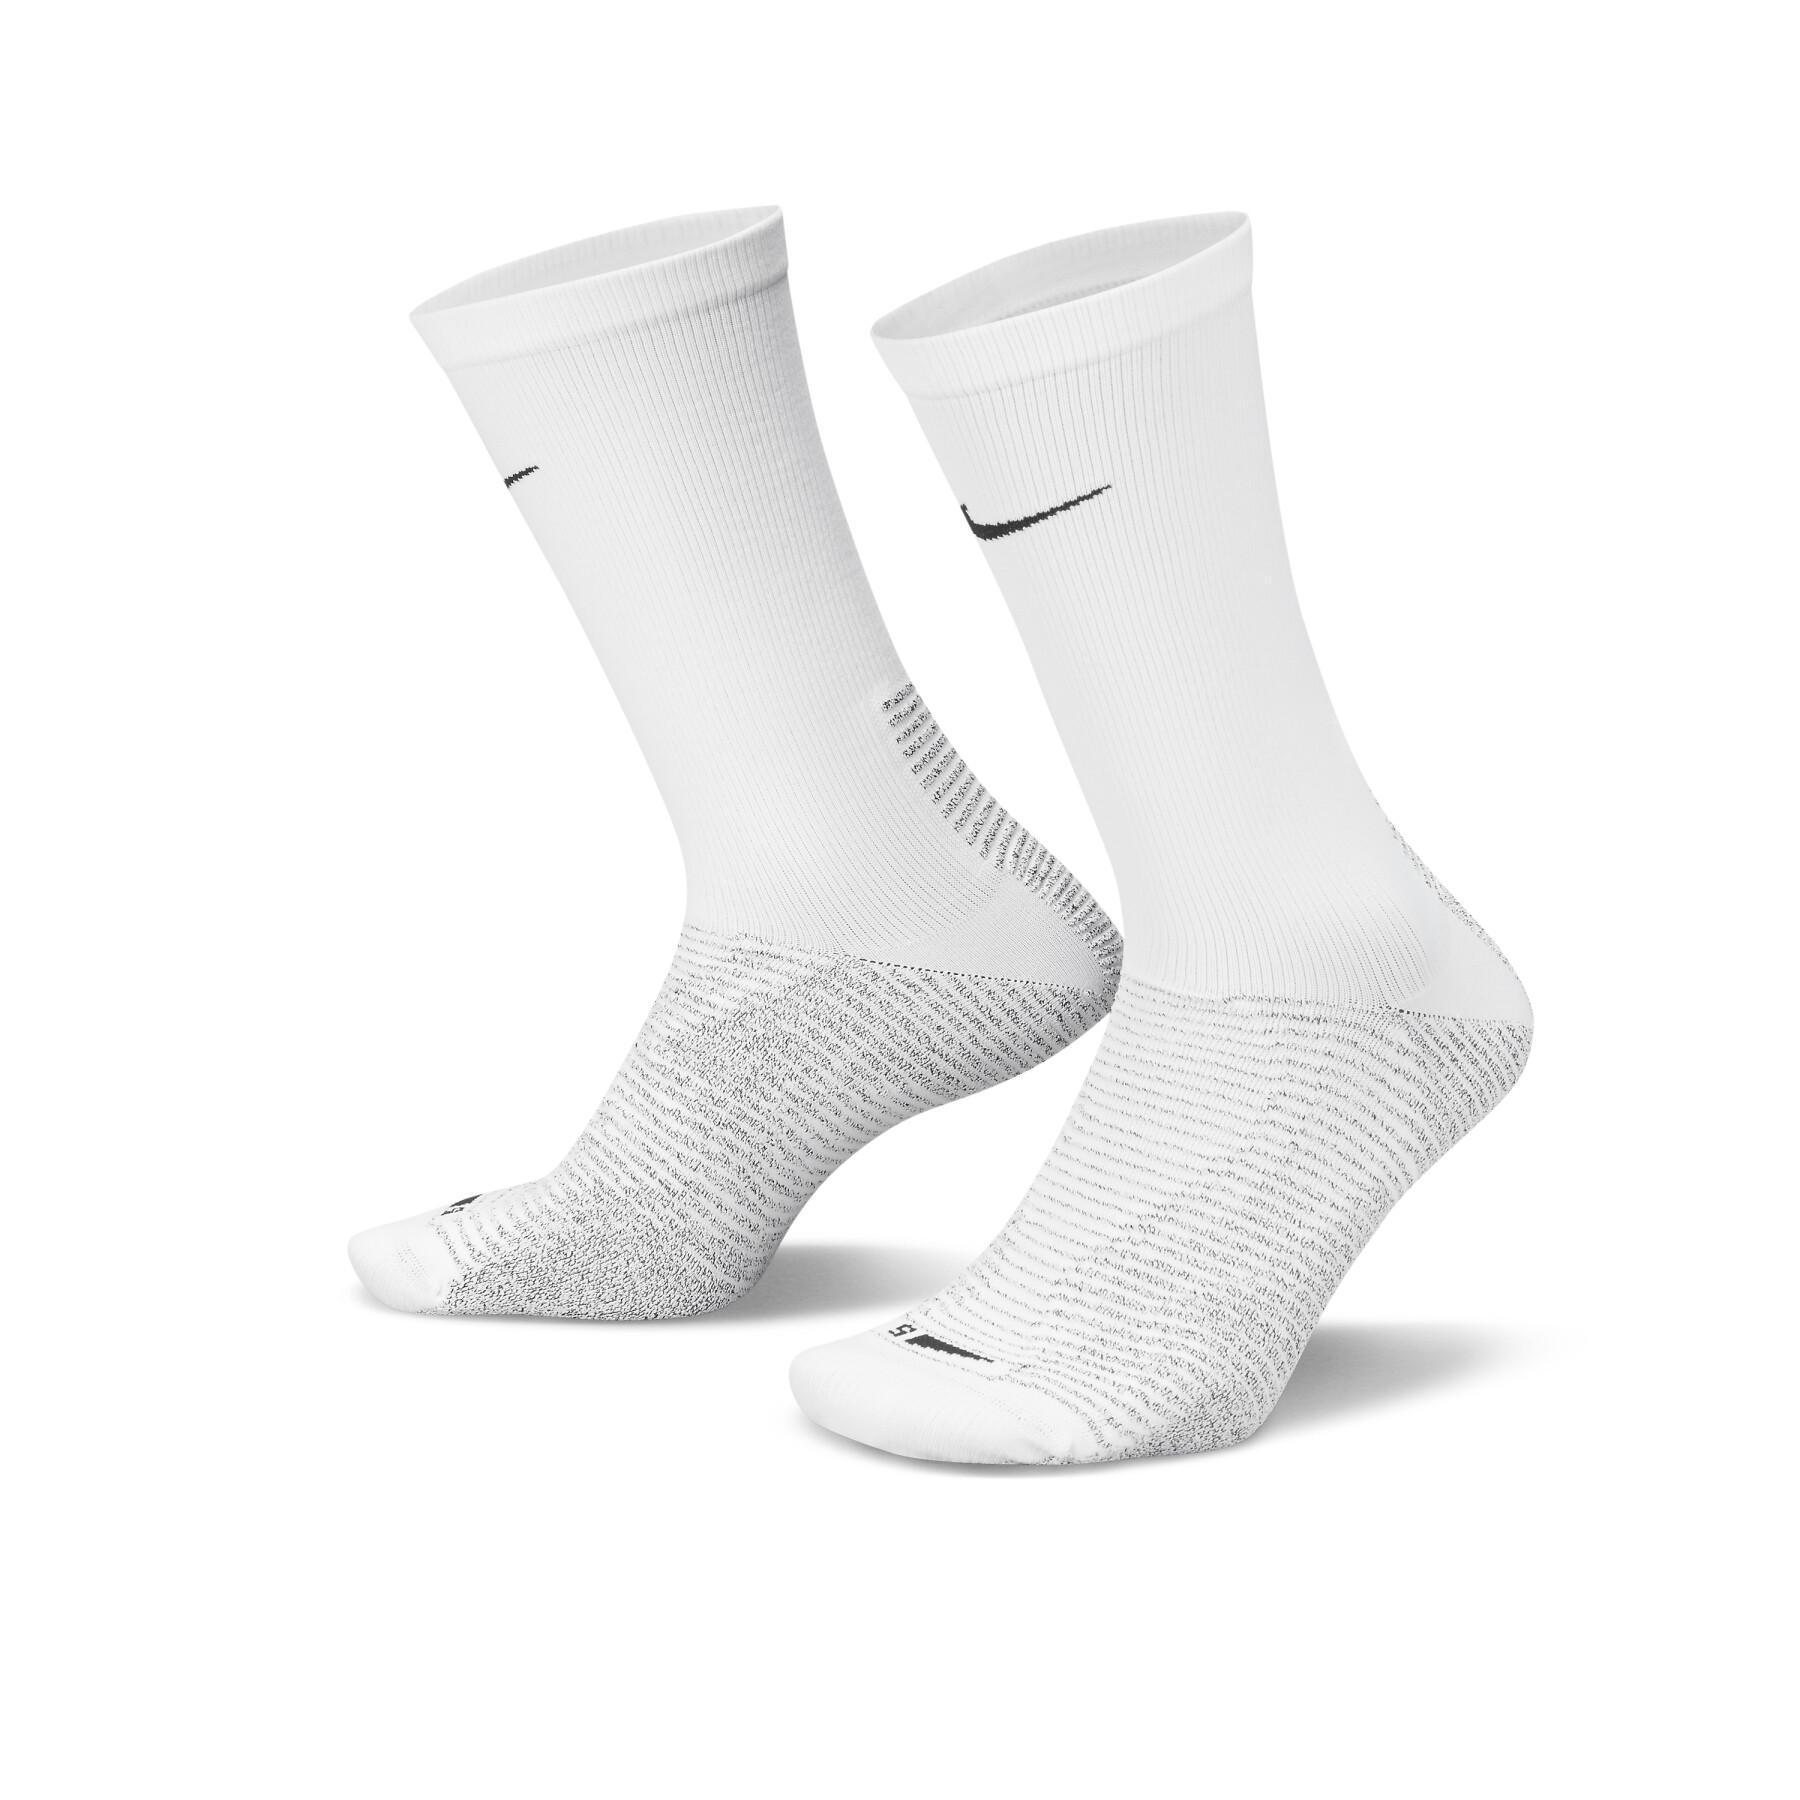 Calcetines Nike Grip Strike - Nike - Marcas - Equipamientos